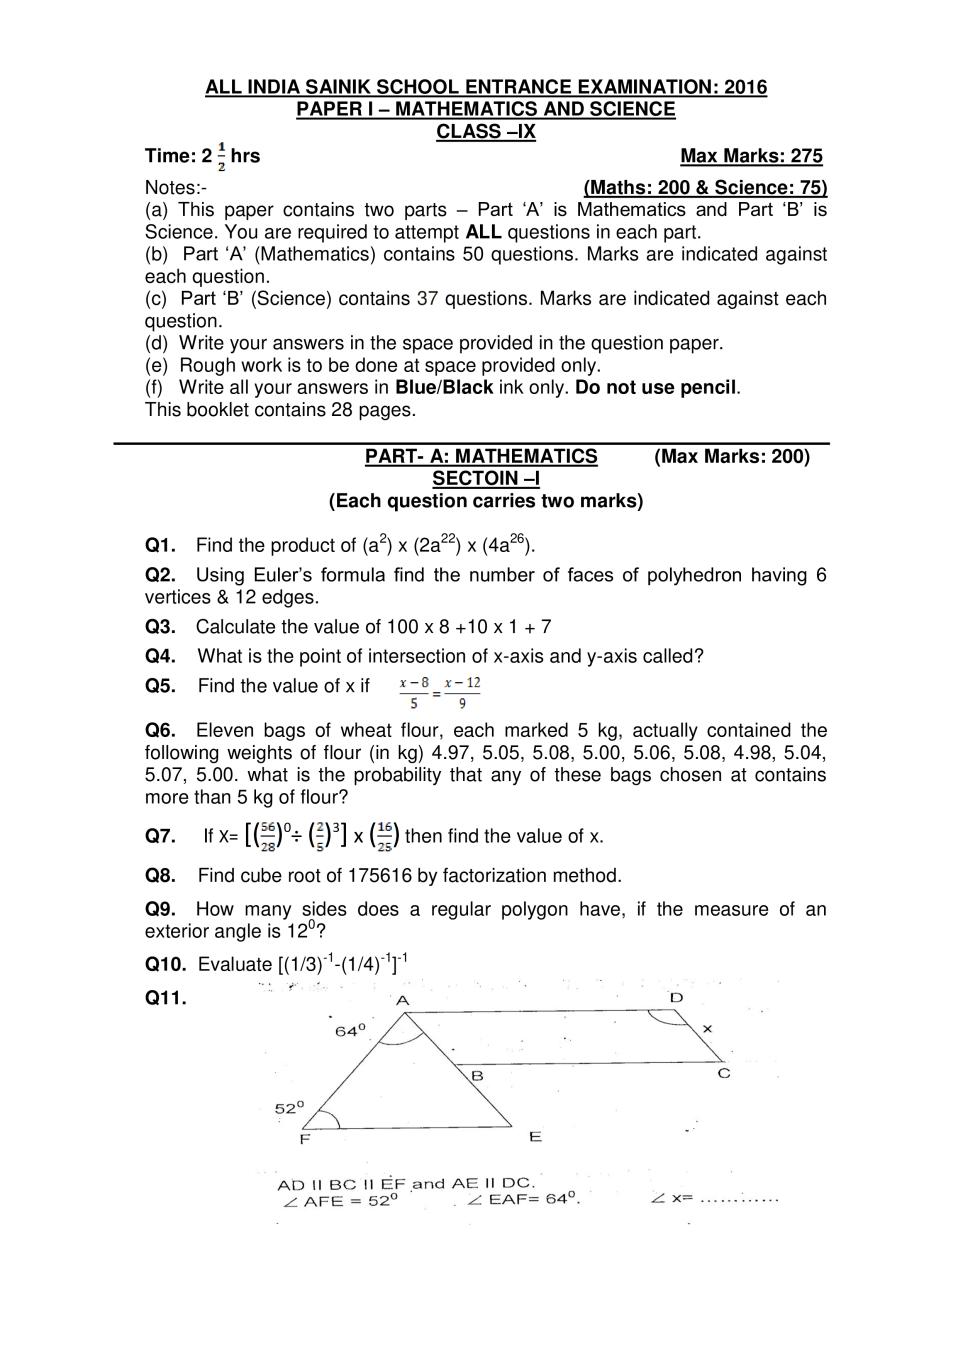 AISSEE 2016 Question Paper for Class 9 | Sainik School Entrance Exam (Paper 1) - Page 1